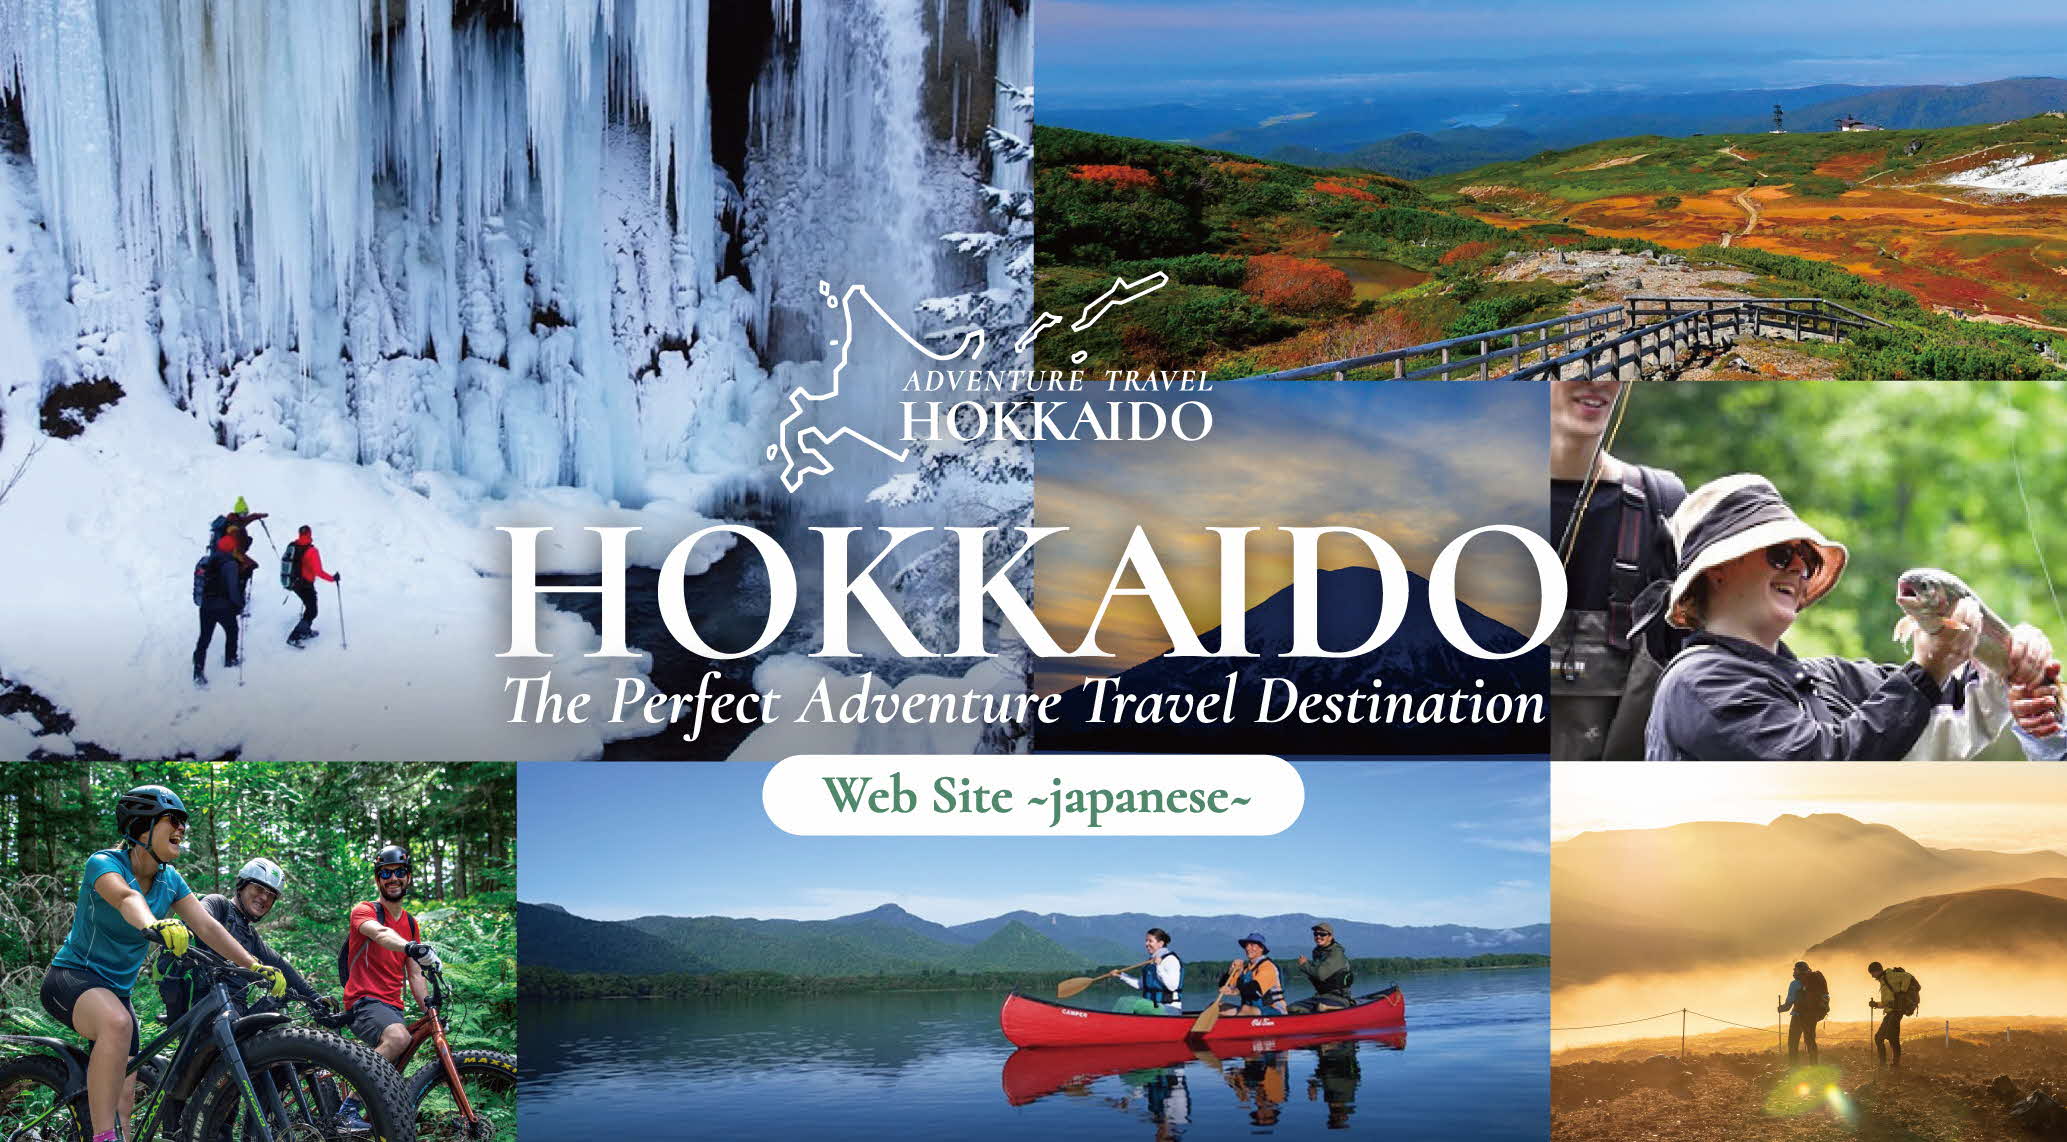 Adventure Travel HOKKAIDO